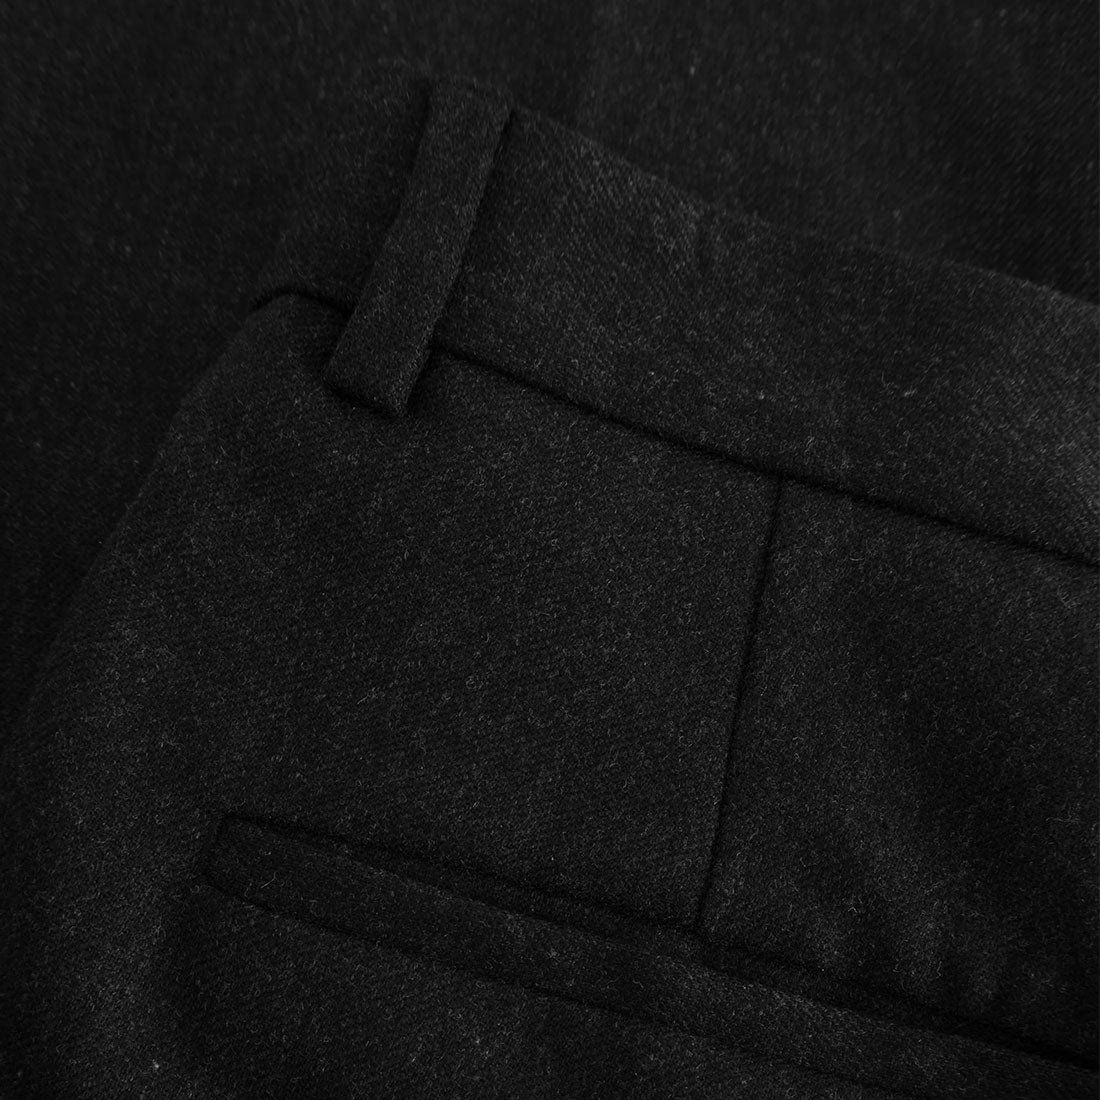 Pantaloni Forét - Read Wool Pants -Antracite